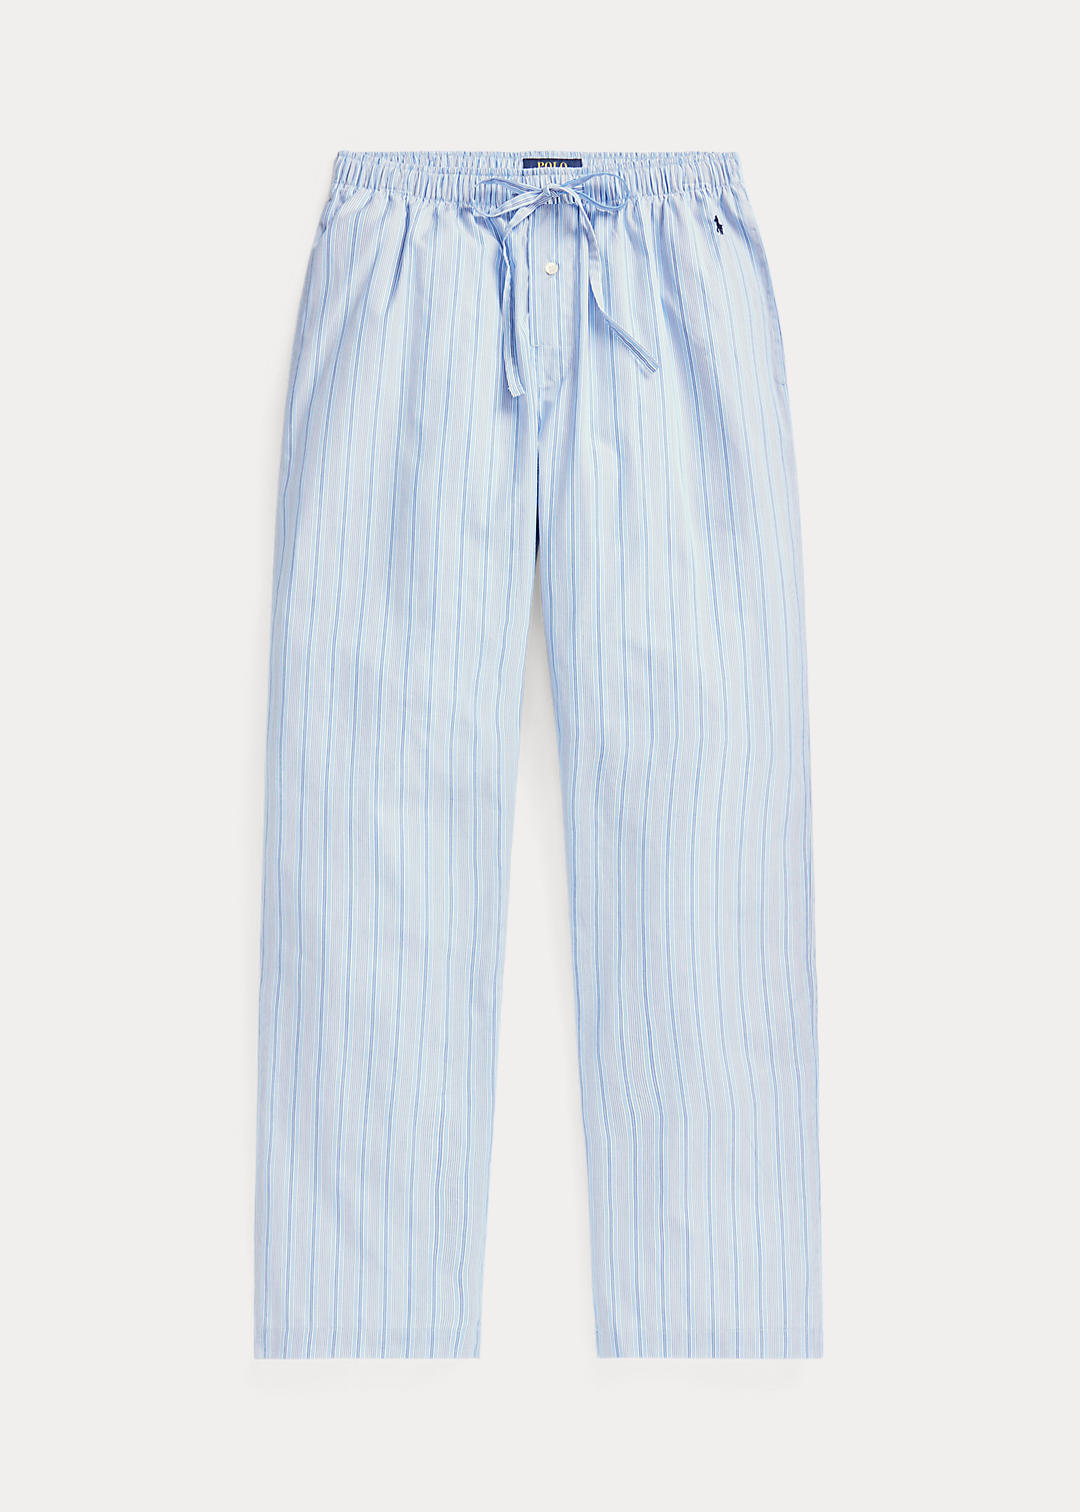 Big & Tall Striped Cotton Pajama Pant 1